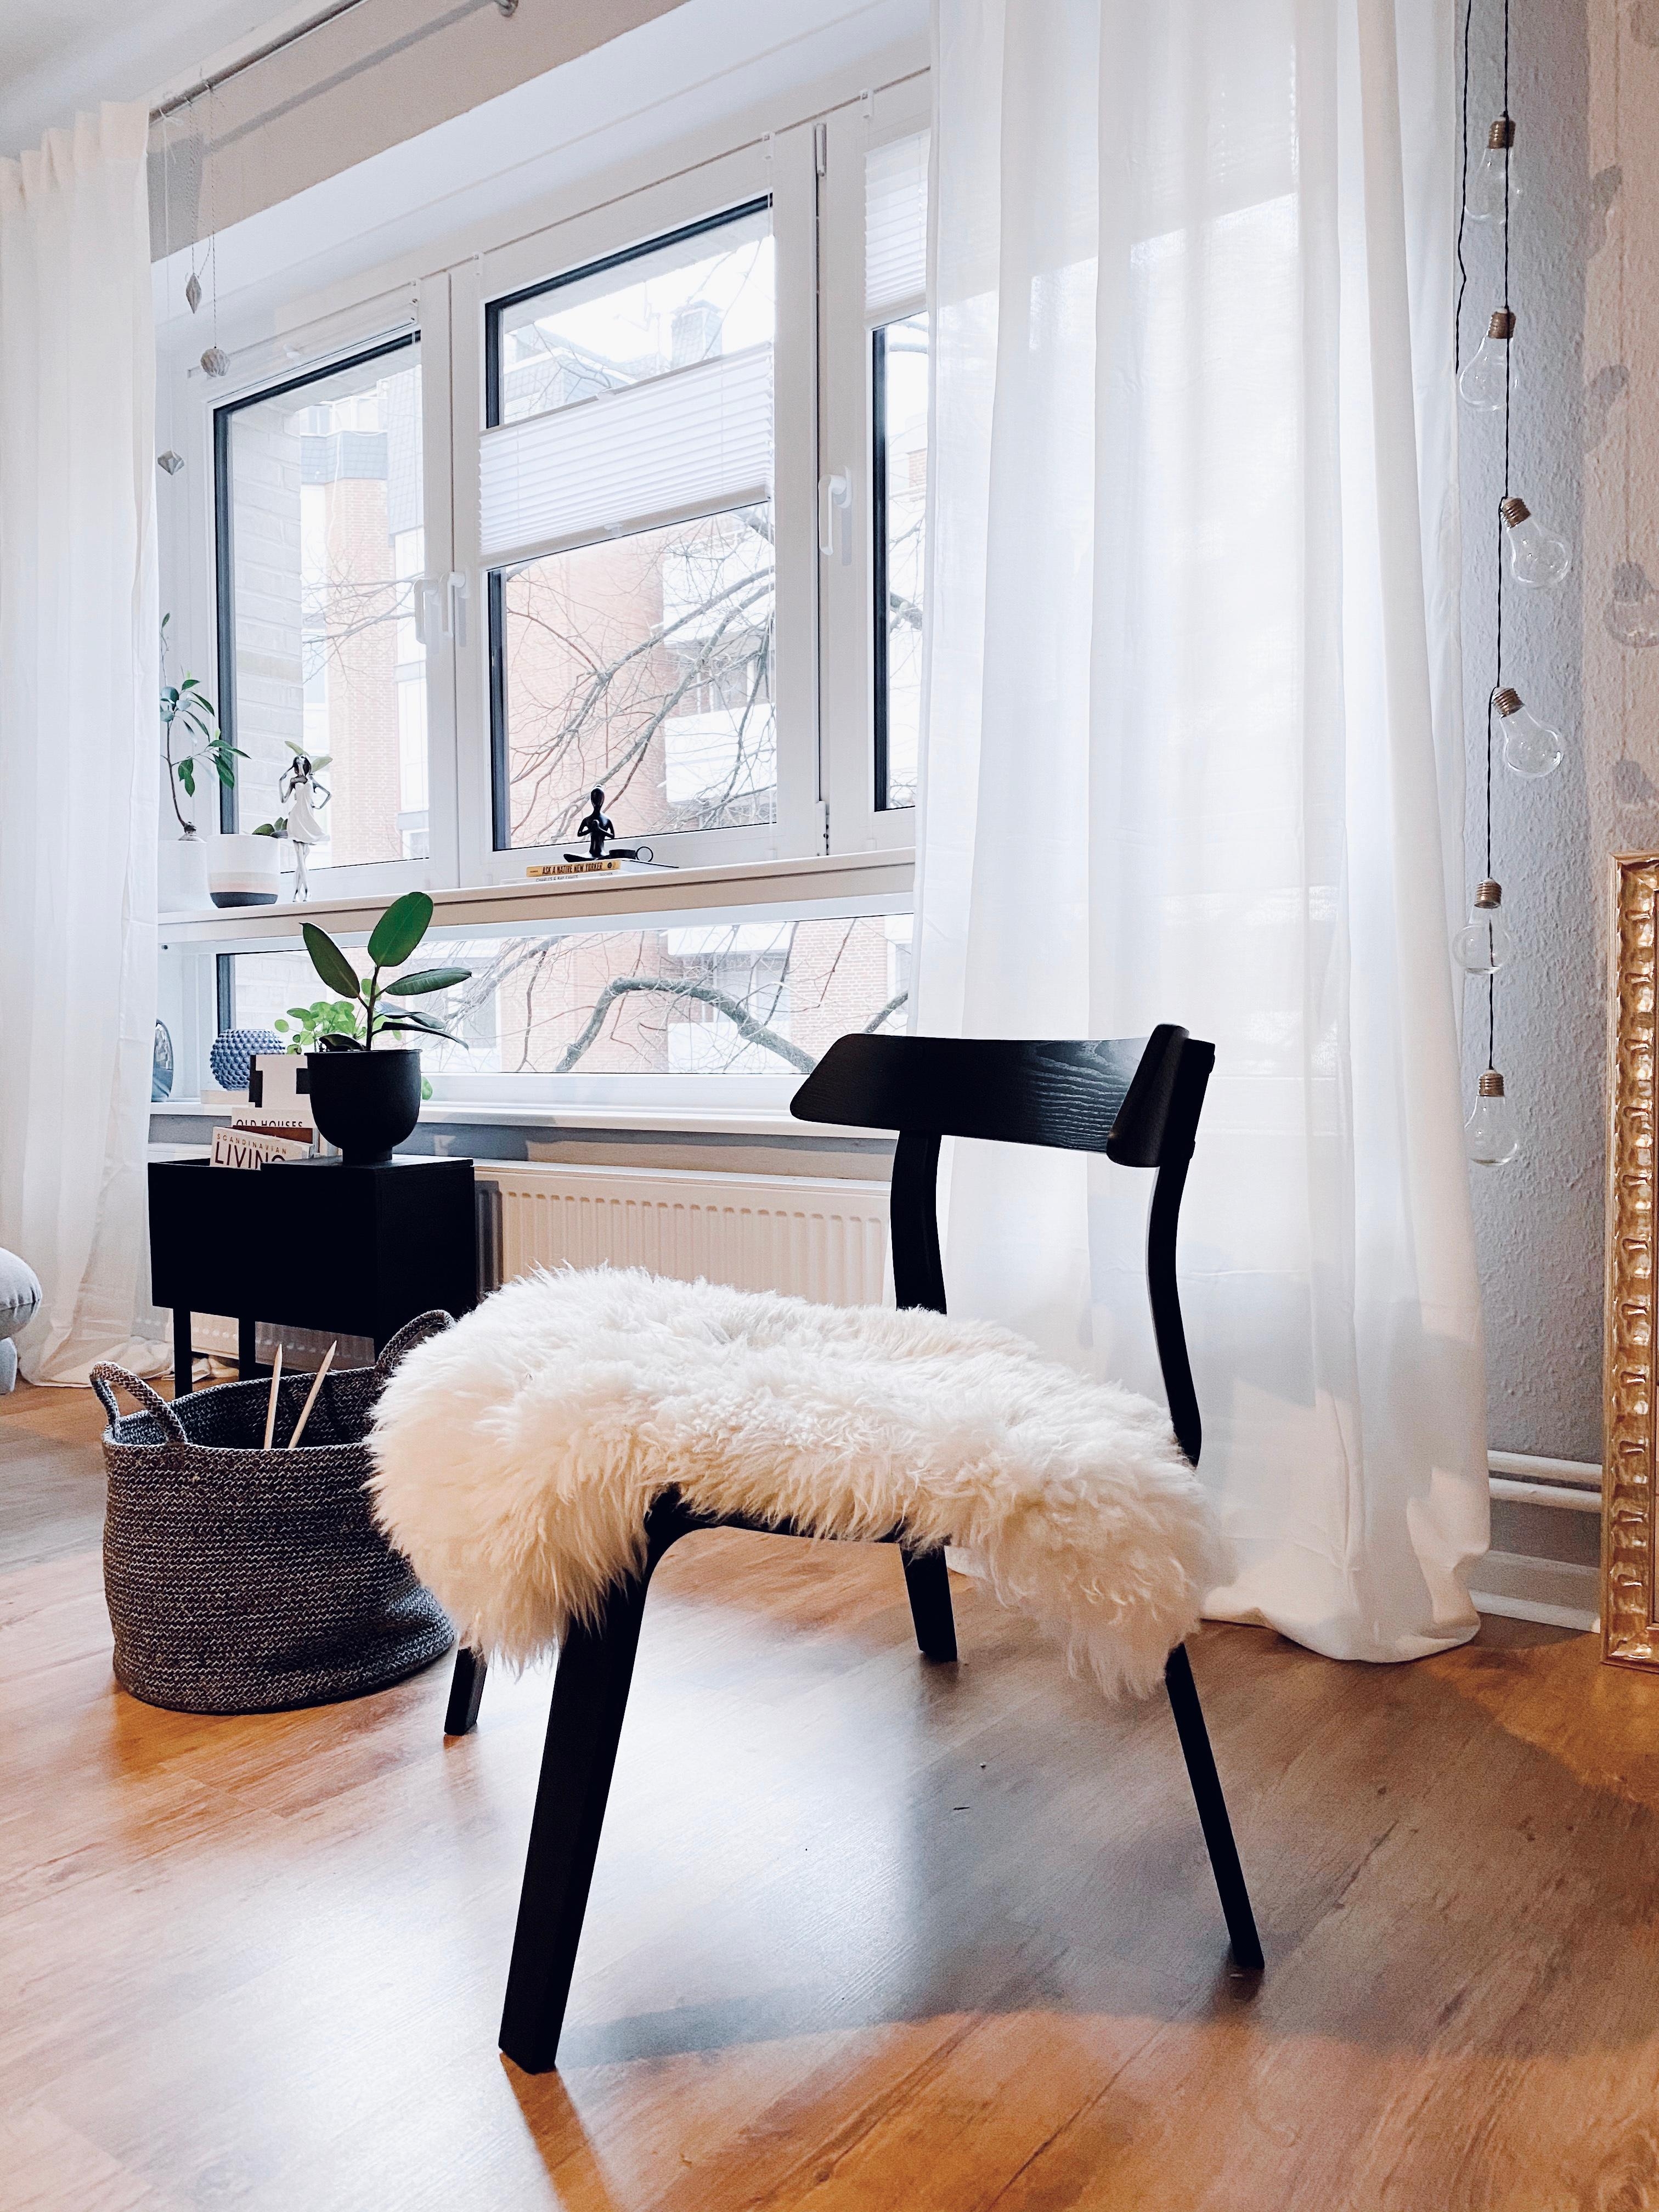 #livingroom #chair #nordichome #scandinavianliving #interior #livingroomgoals #monochrome #blackandwhite #minimalistic